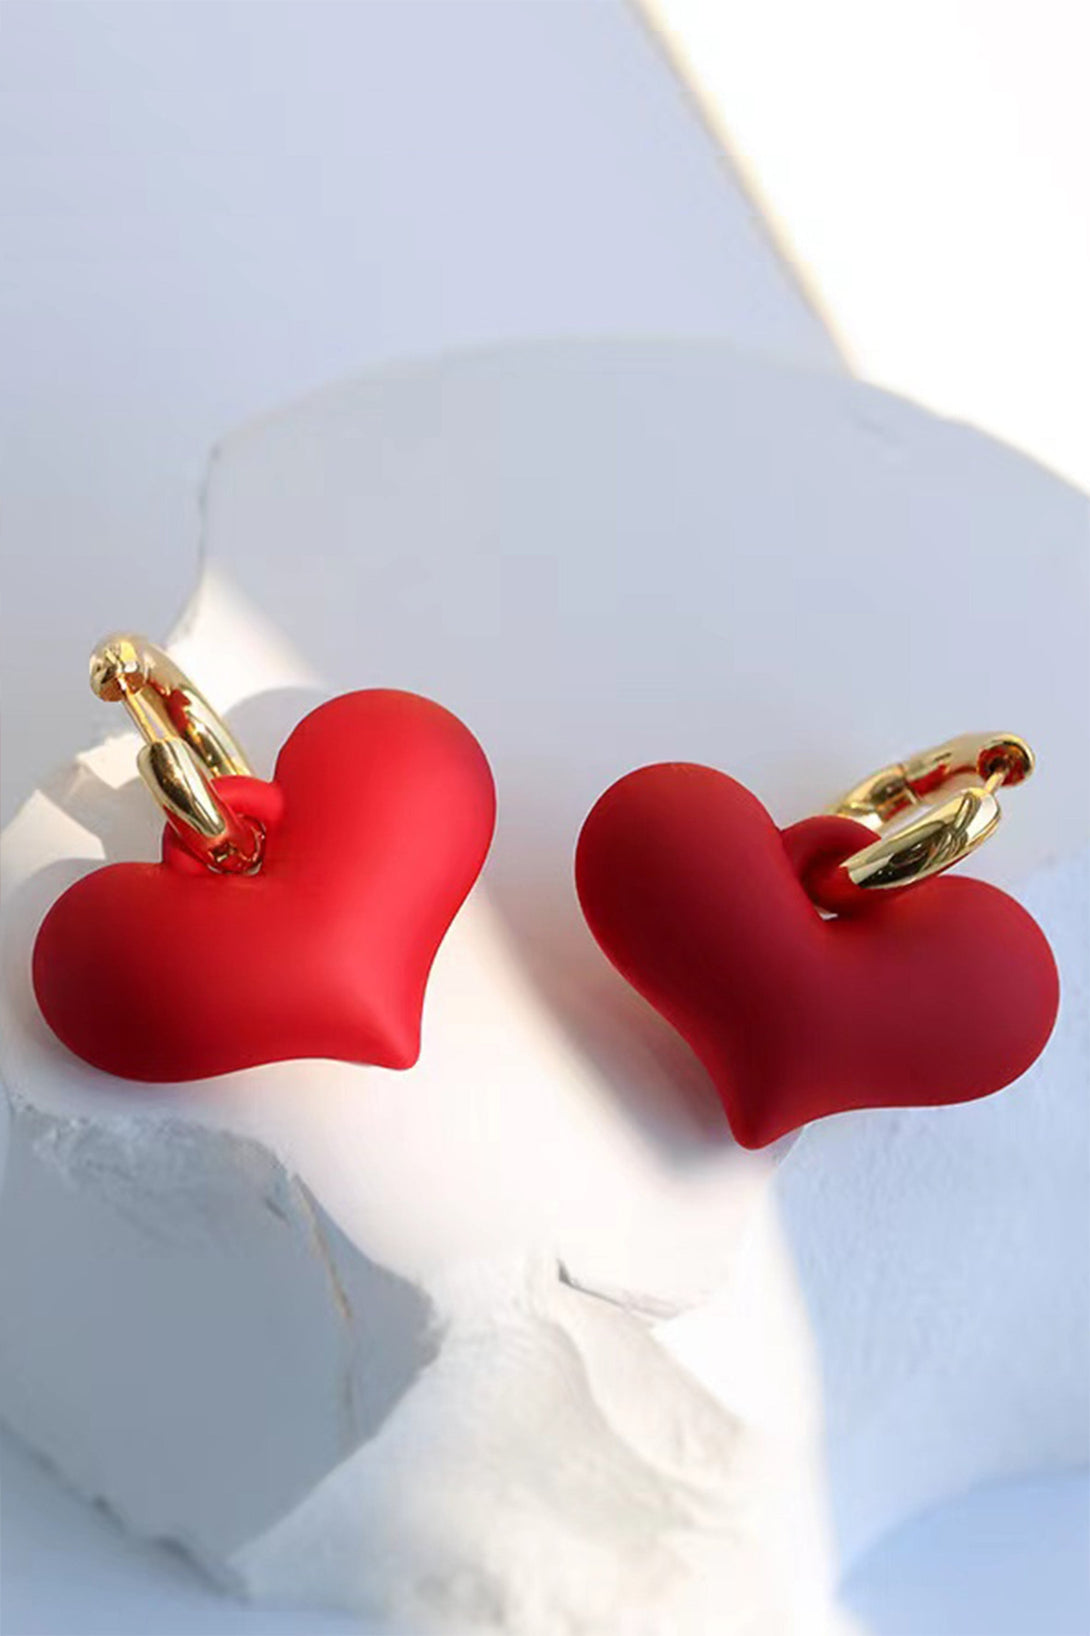 Red Chunky Heart Drop Earrings - Classicharms